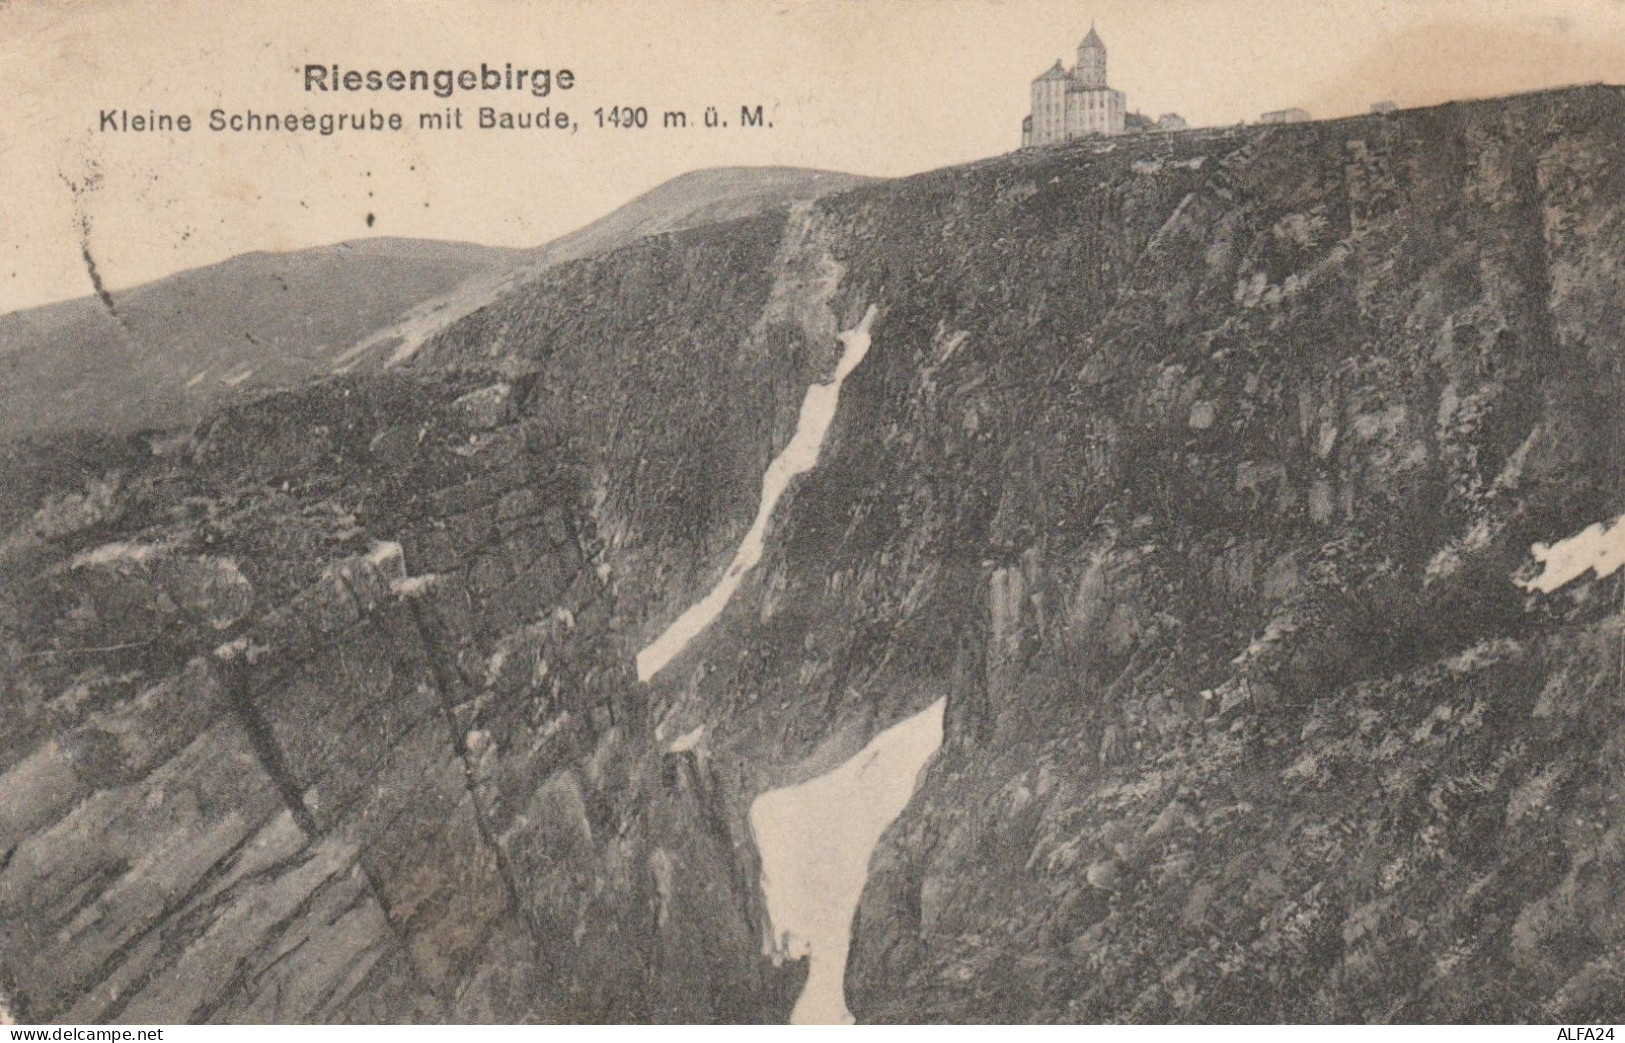 CARTOLINA VIAGGIATA 1921 RIESENGEBIRGE GERMANIA (TY1115 - Guenzburg